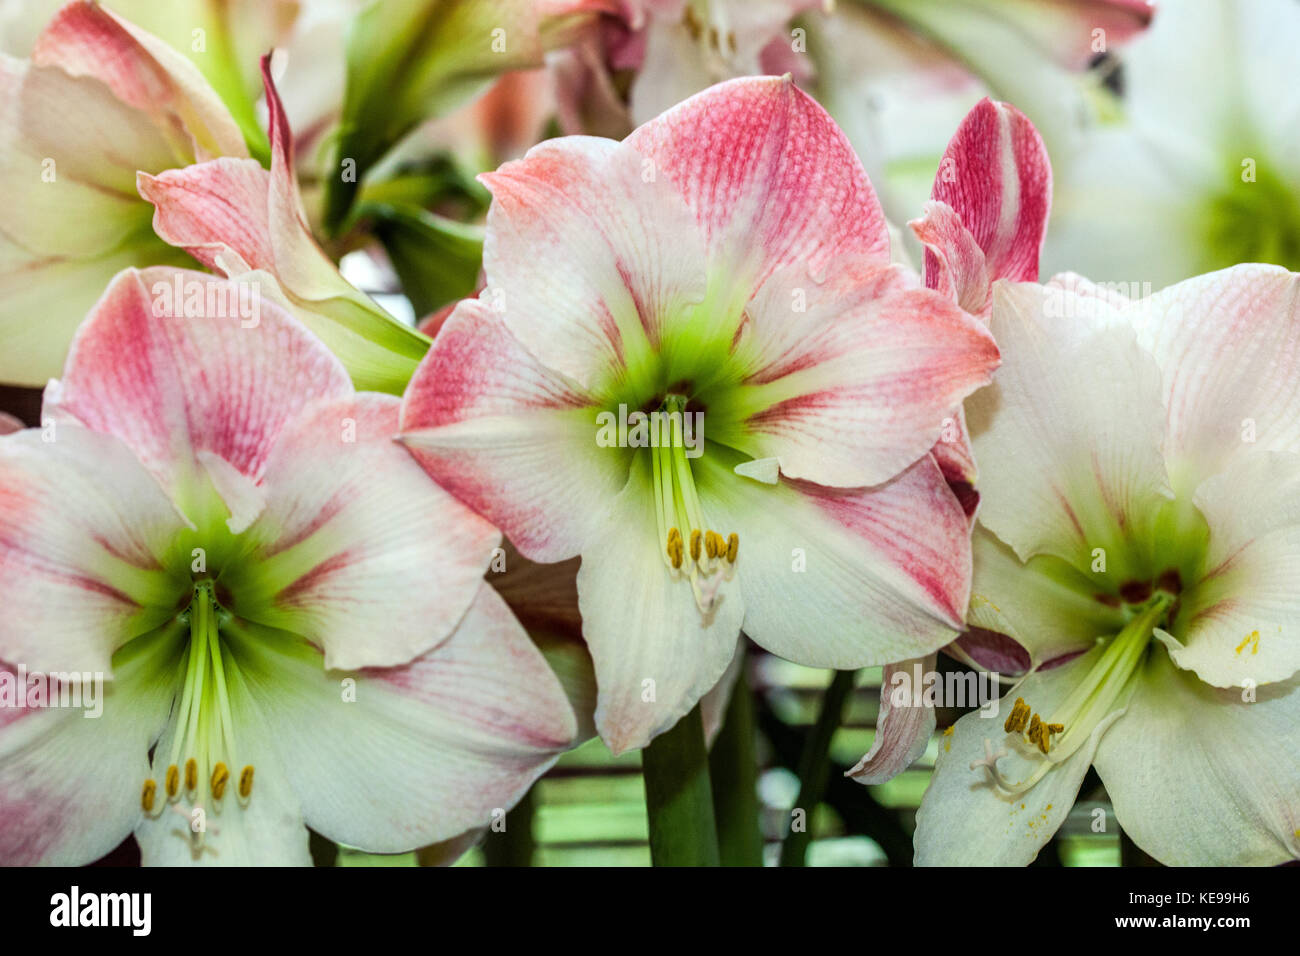 Hippeastrum Amarylis 'Apple Blossom' Stock Photo